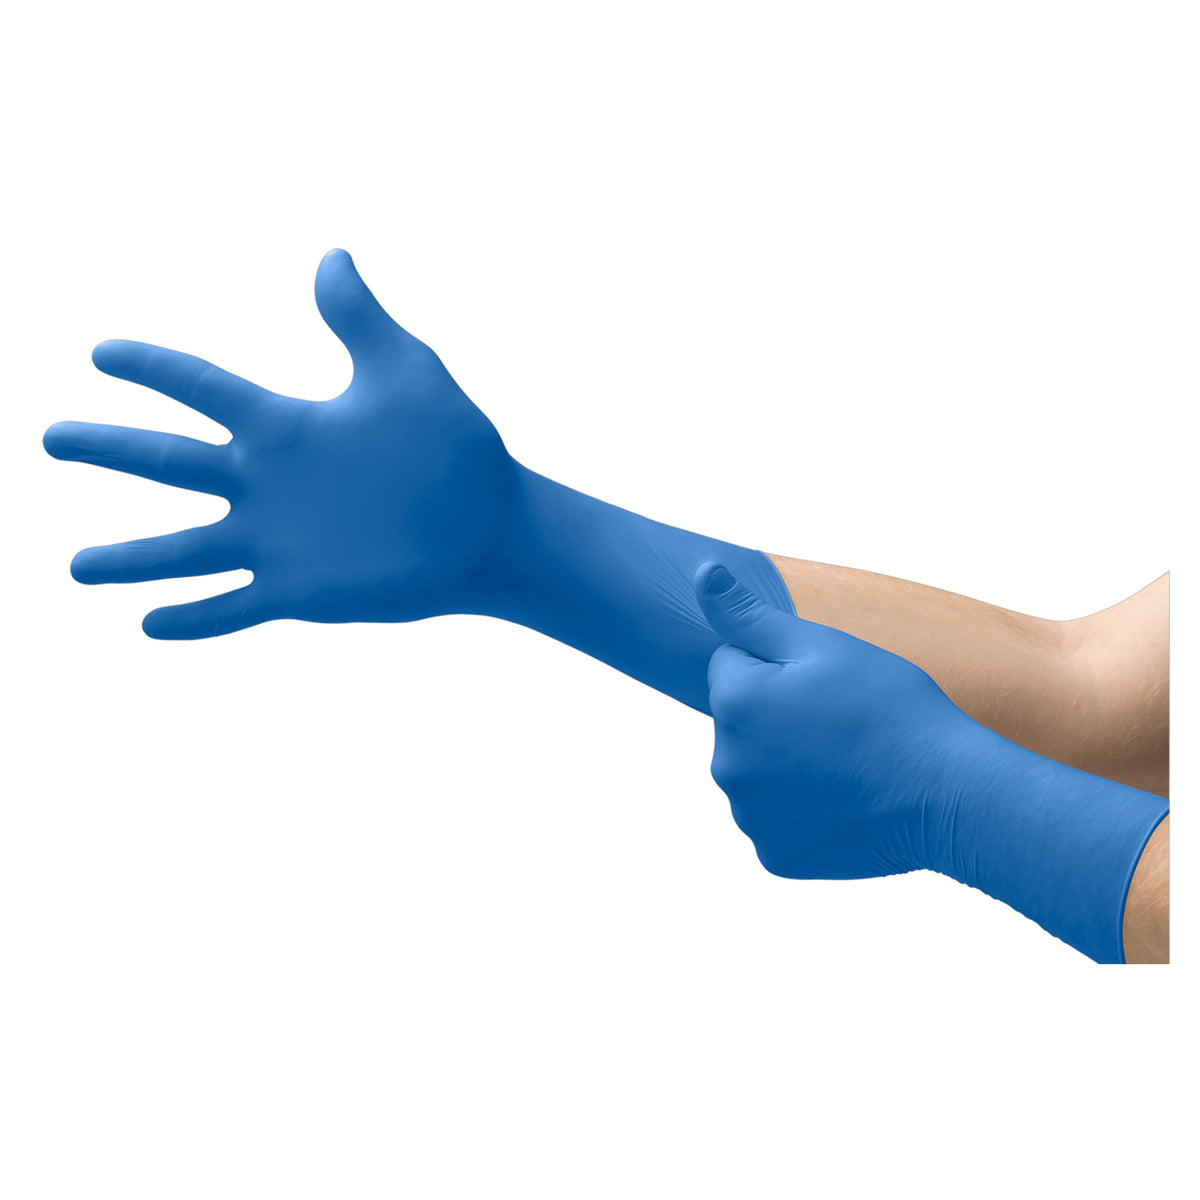 SafeGrip Latex Gloves (Powder Free) (SG-375)